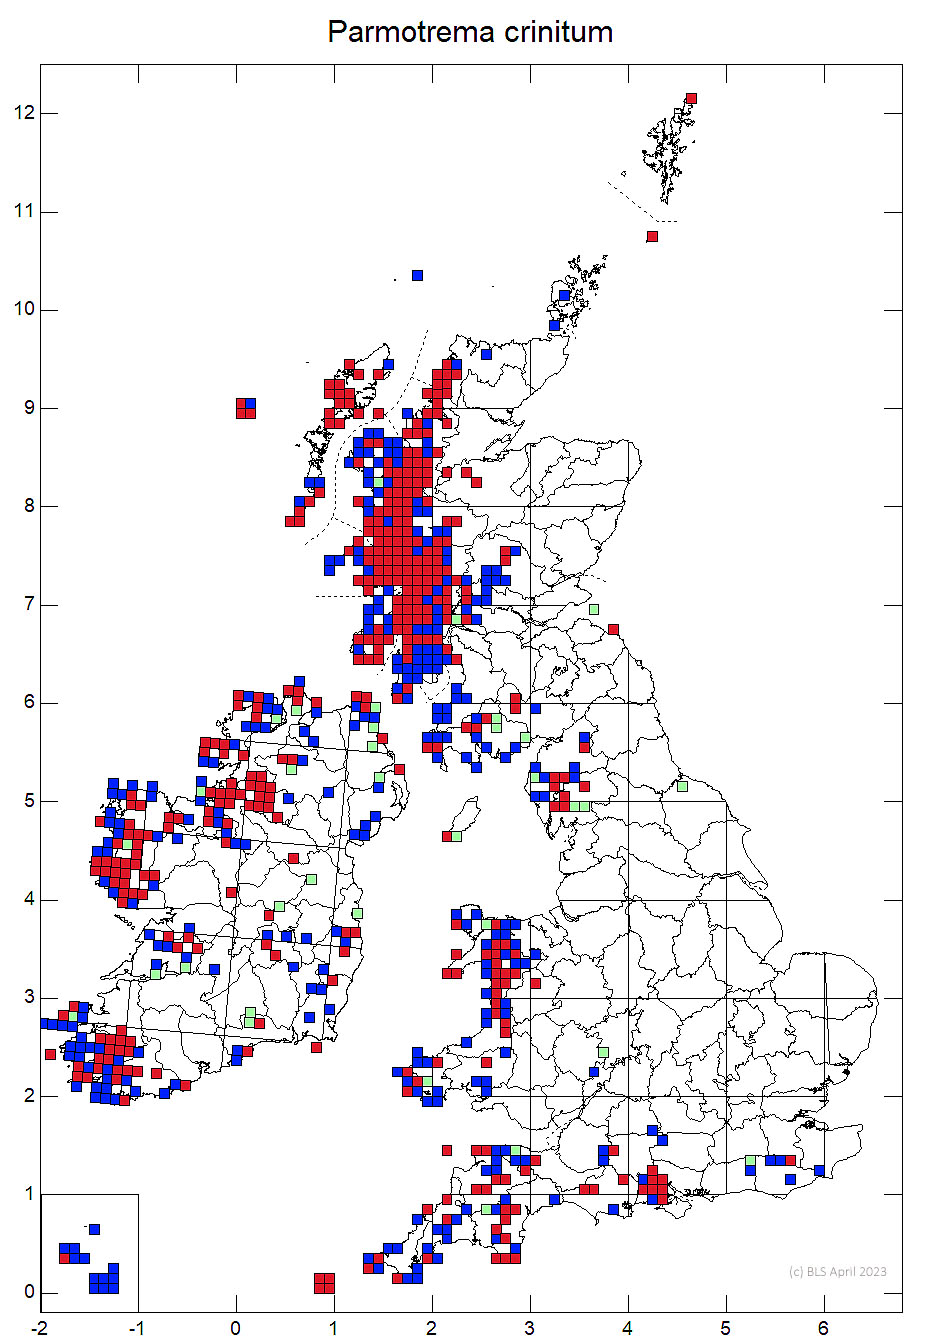 Parmotrema crinitum 10km sq distribution map